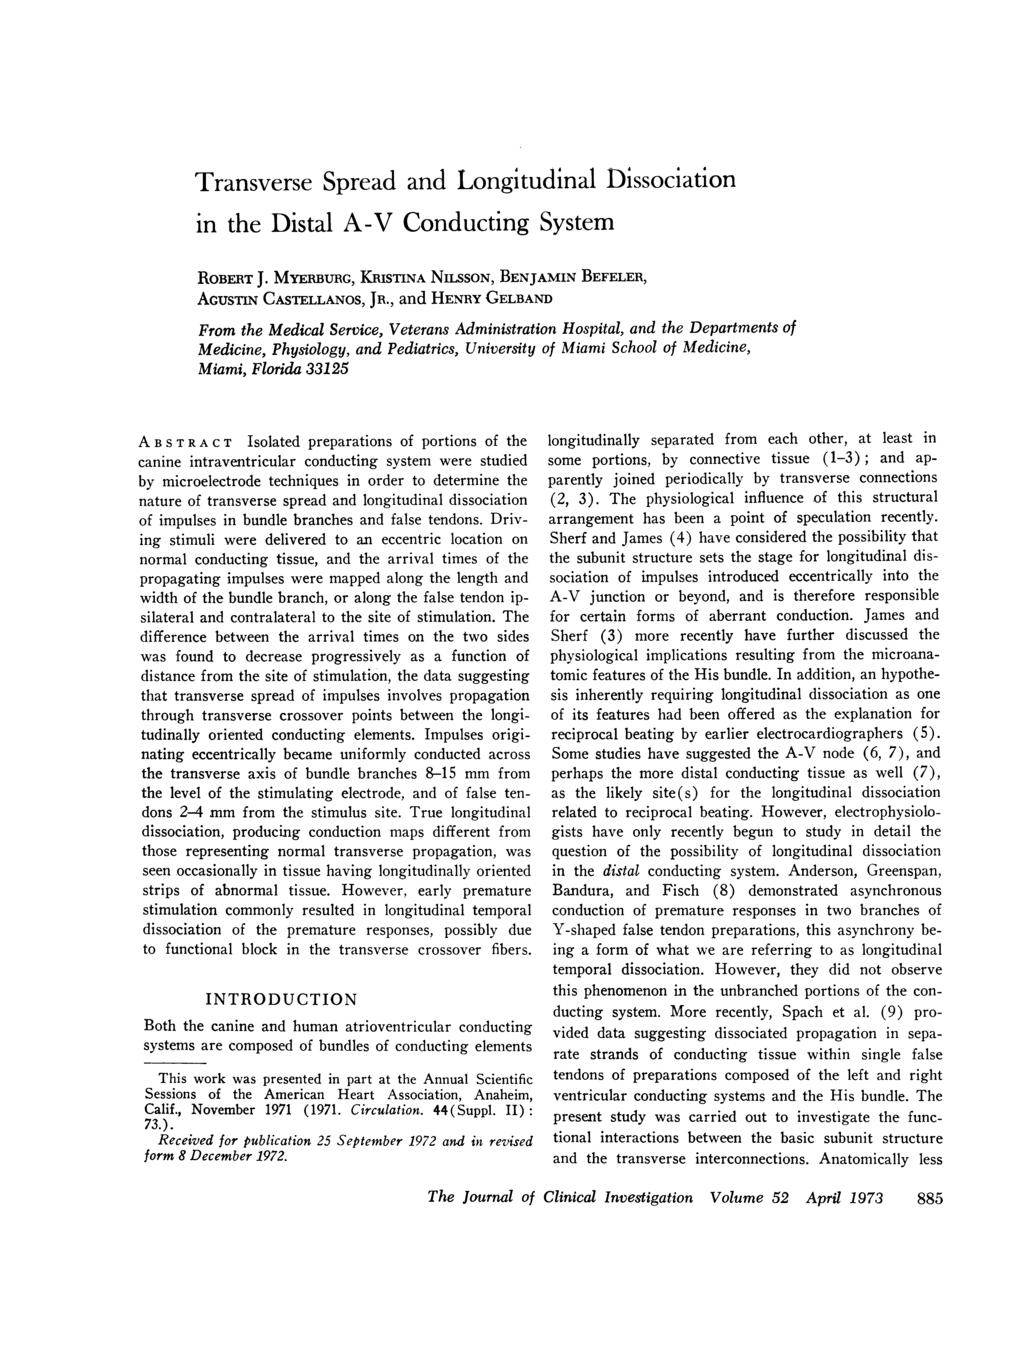 Transverse Spread and Longitudinal Dissociation in the Distal A-V Conducting System ROBERT J. MYERBURG, KRISTINA NILSSON, BENJAMIN BEFELER, AGuSTIN CASTELLANOS, JR.